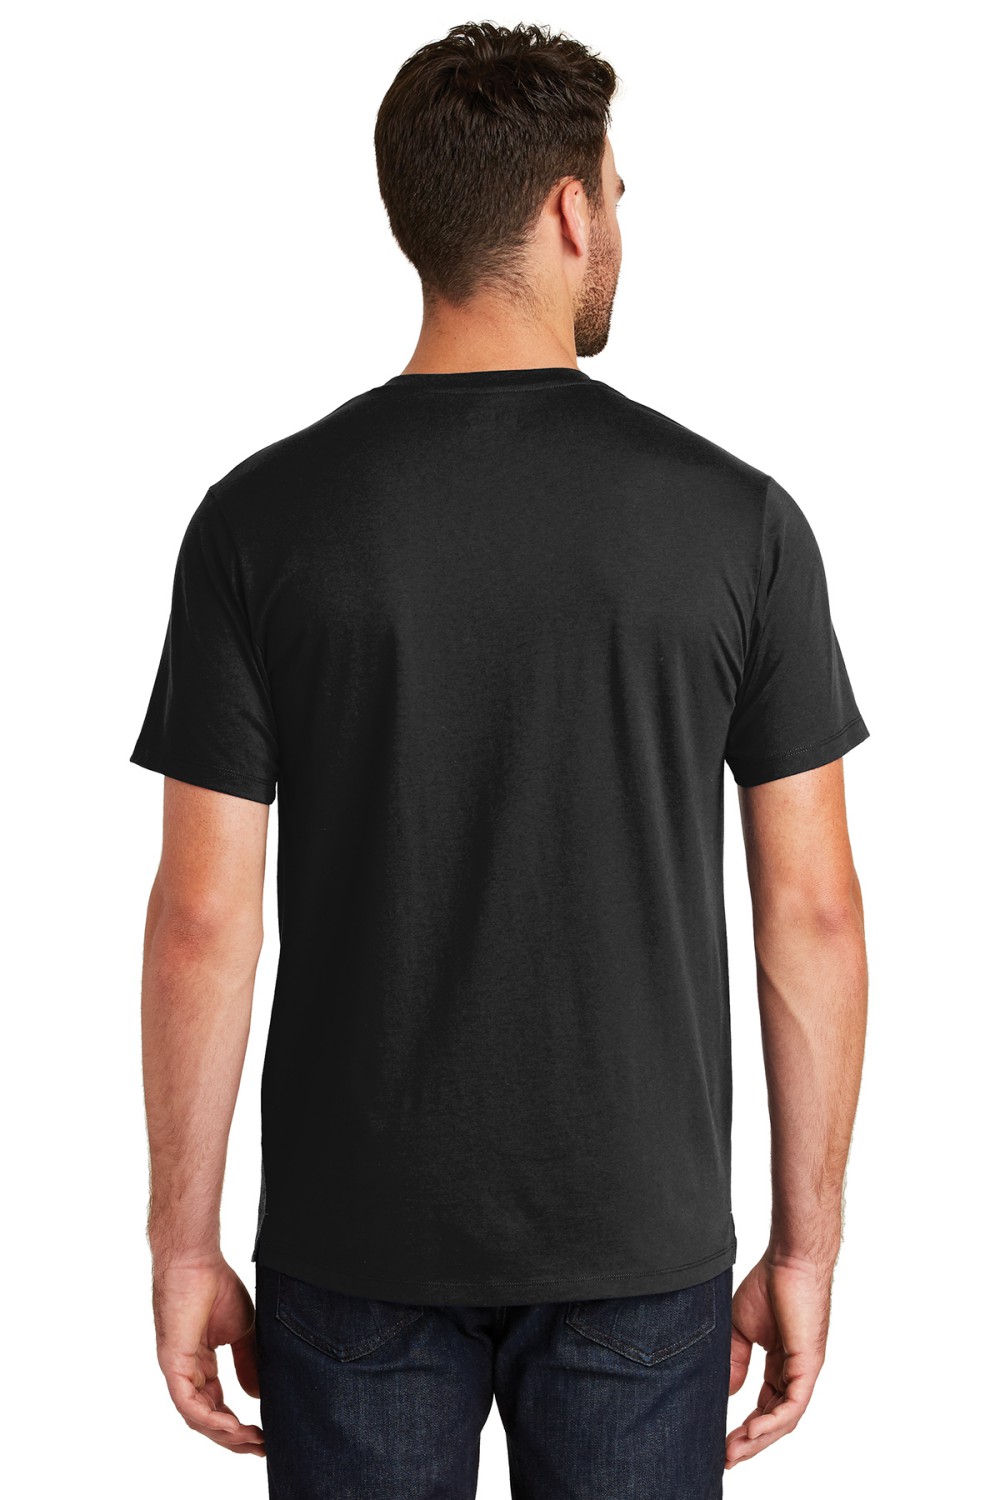 'New Era NEA107 Men's Varsity T-Shirt'